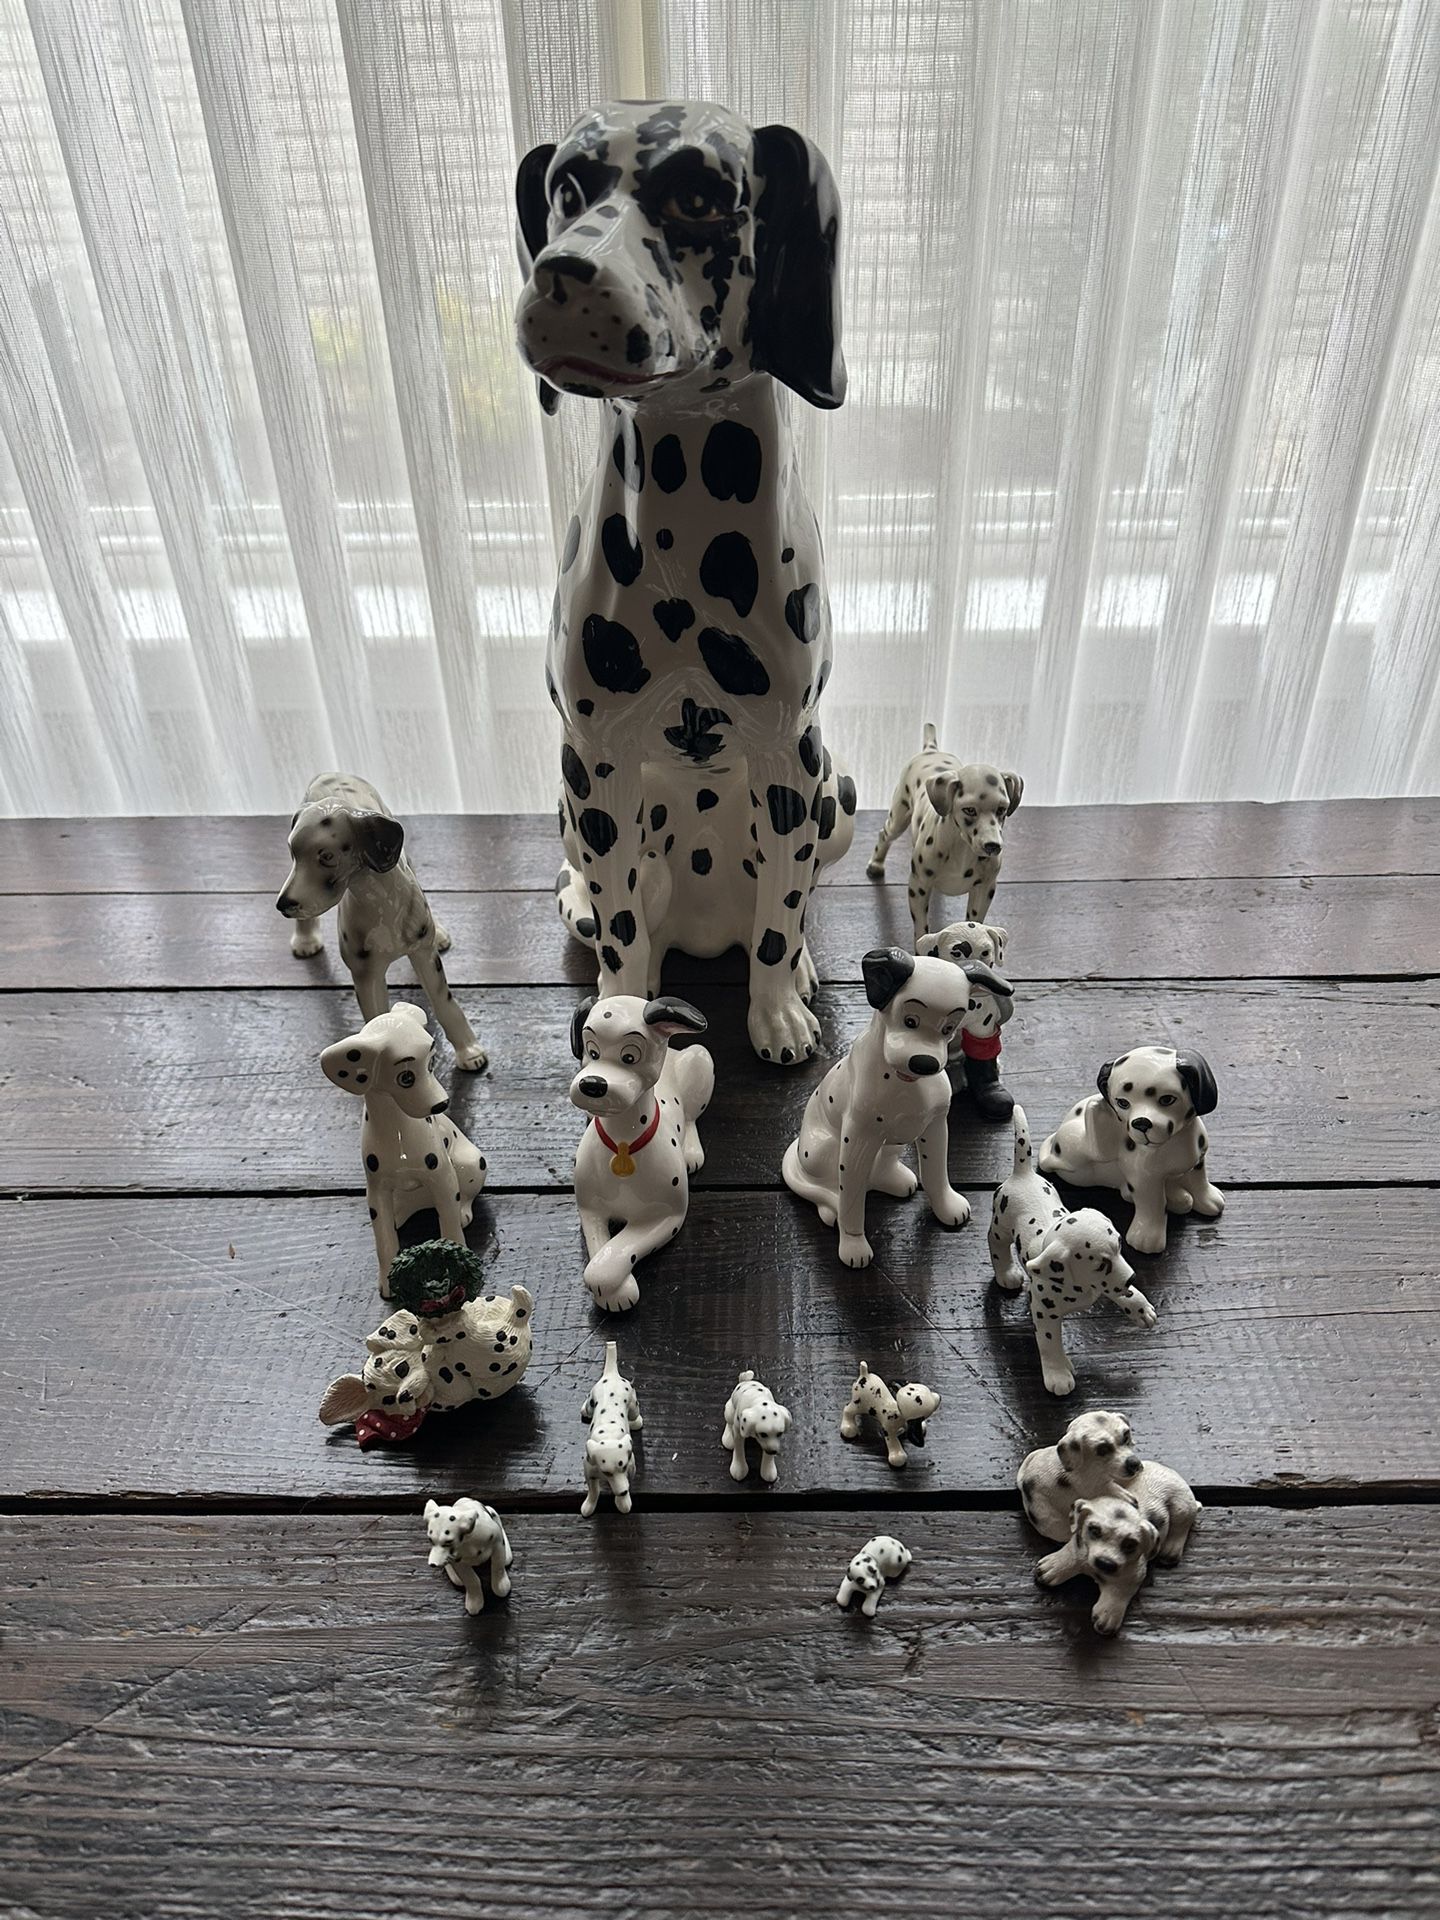 Dalmatian figurines